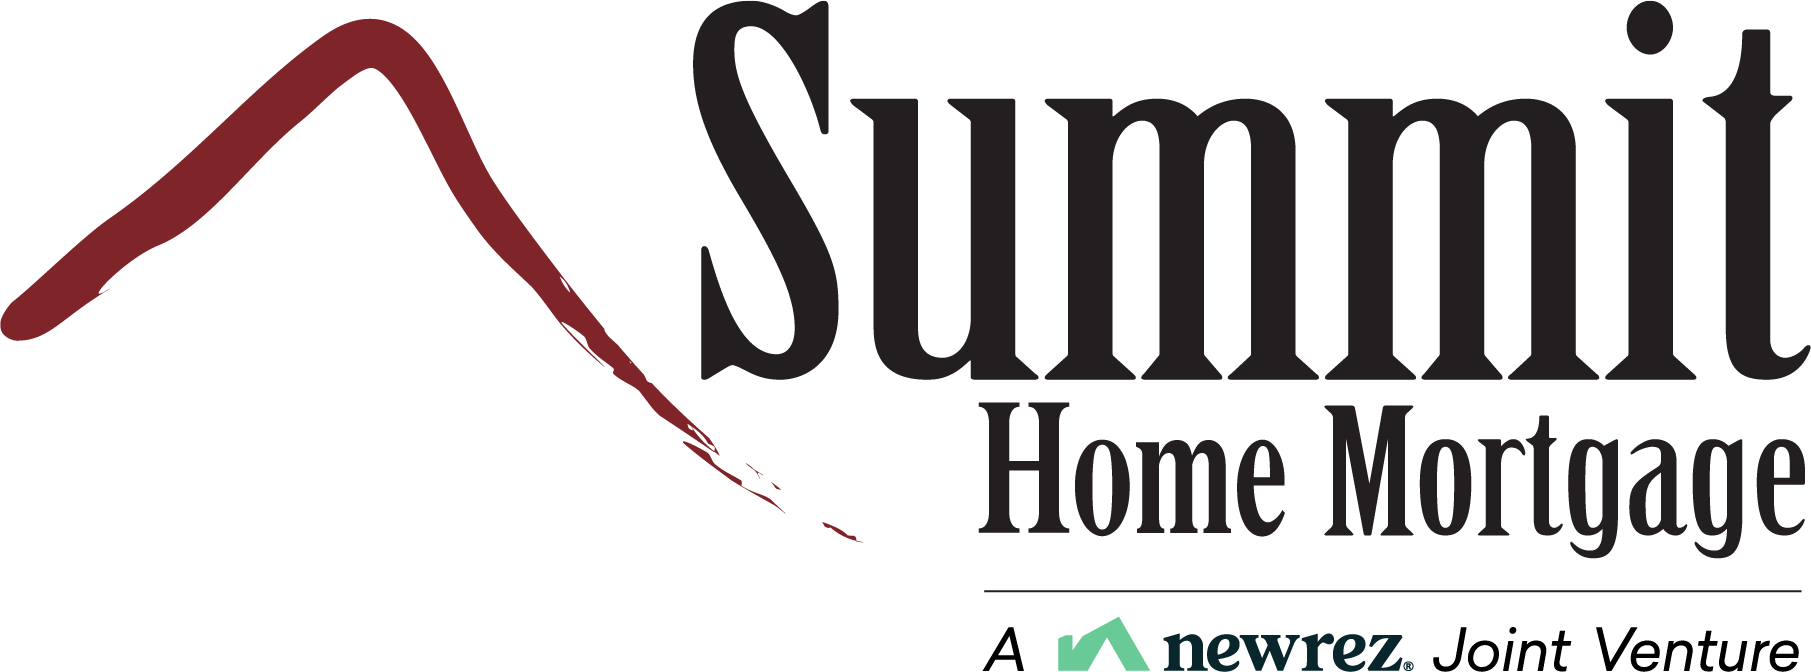 Submmit Home Mortgage logo